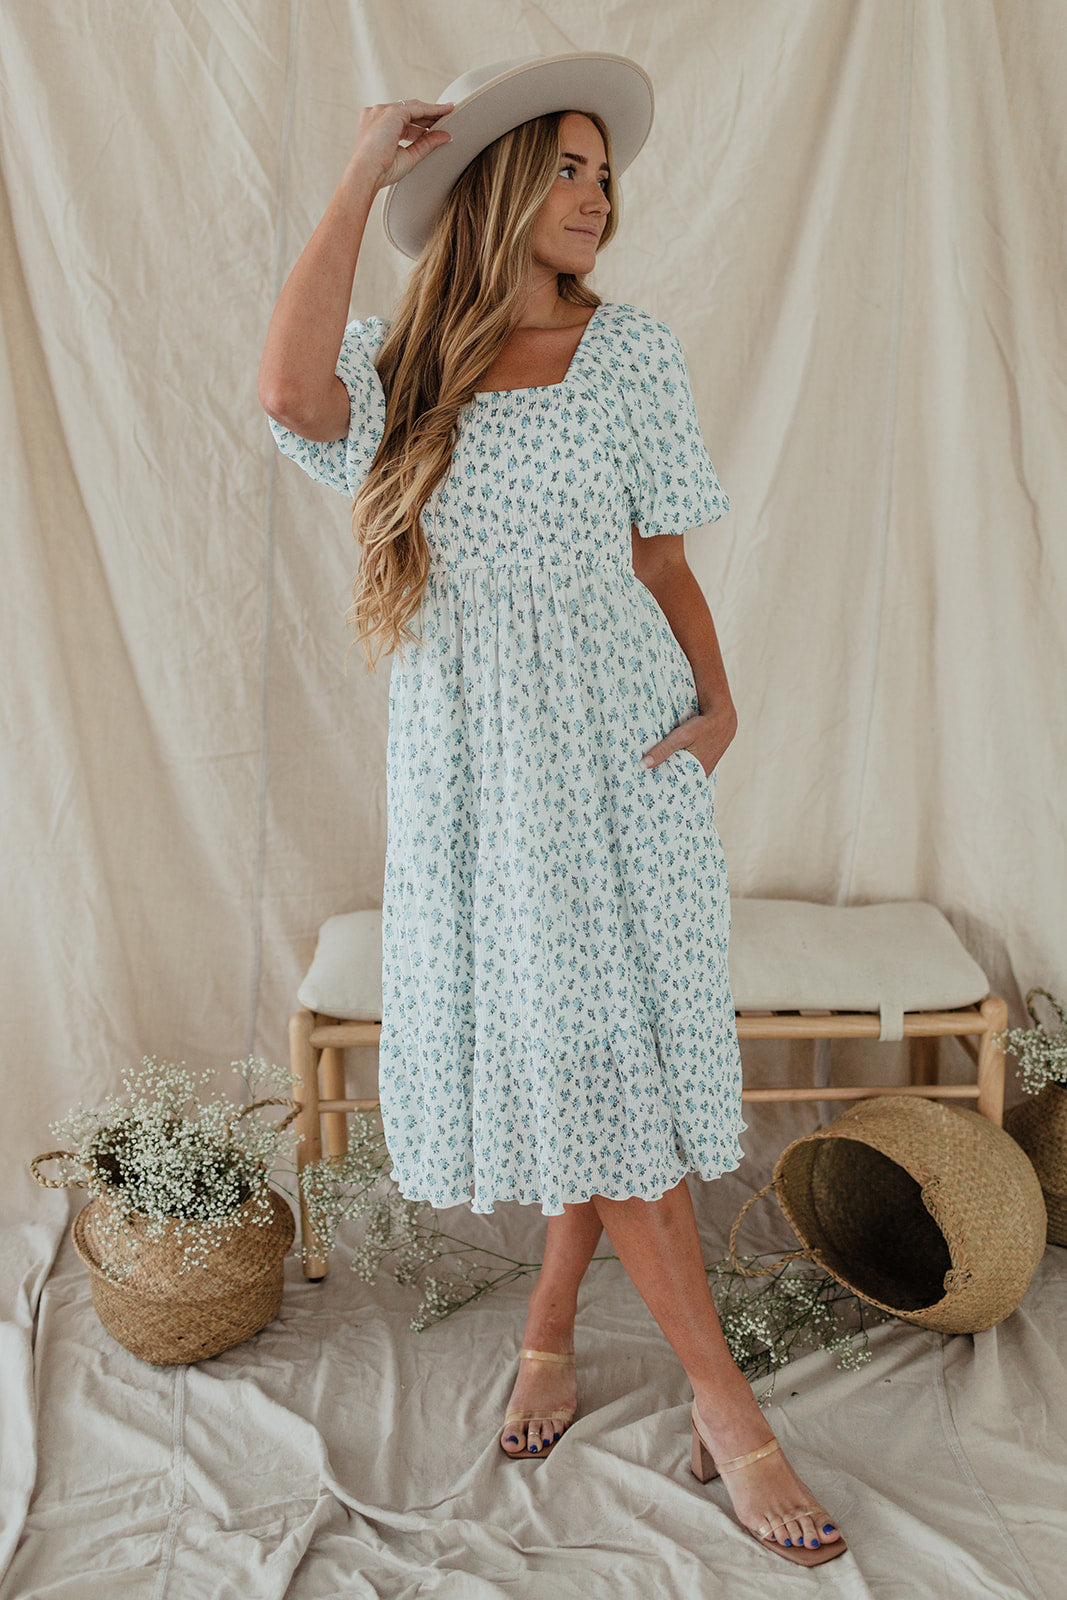 Loemes Summer Cute Floral Flowy Knee Length Sundressses Beach Dress for  Women 20 | eBay